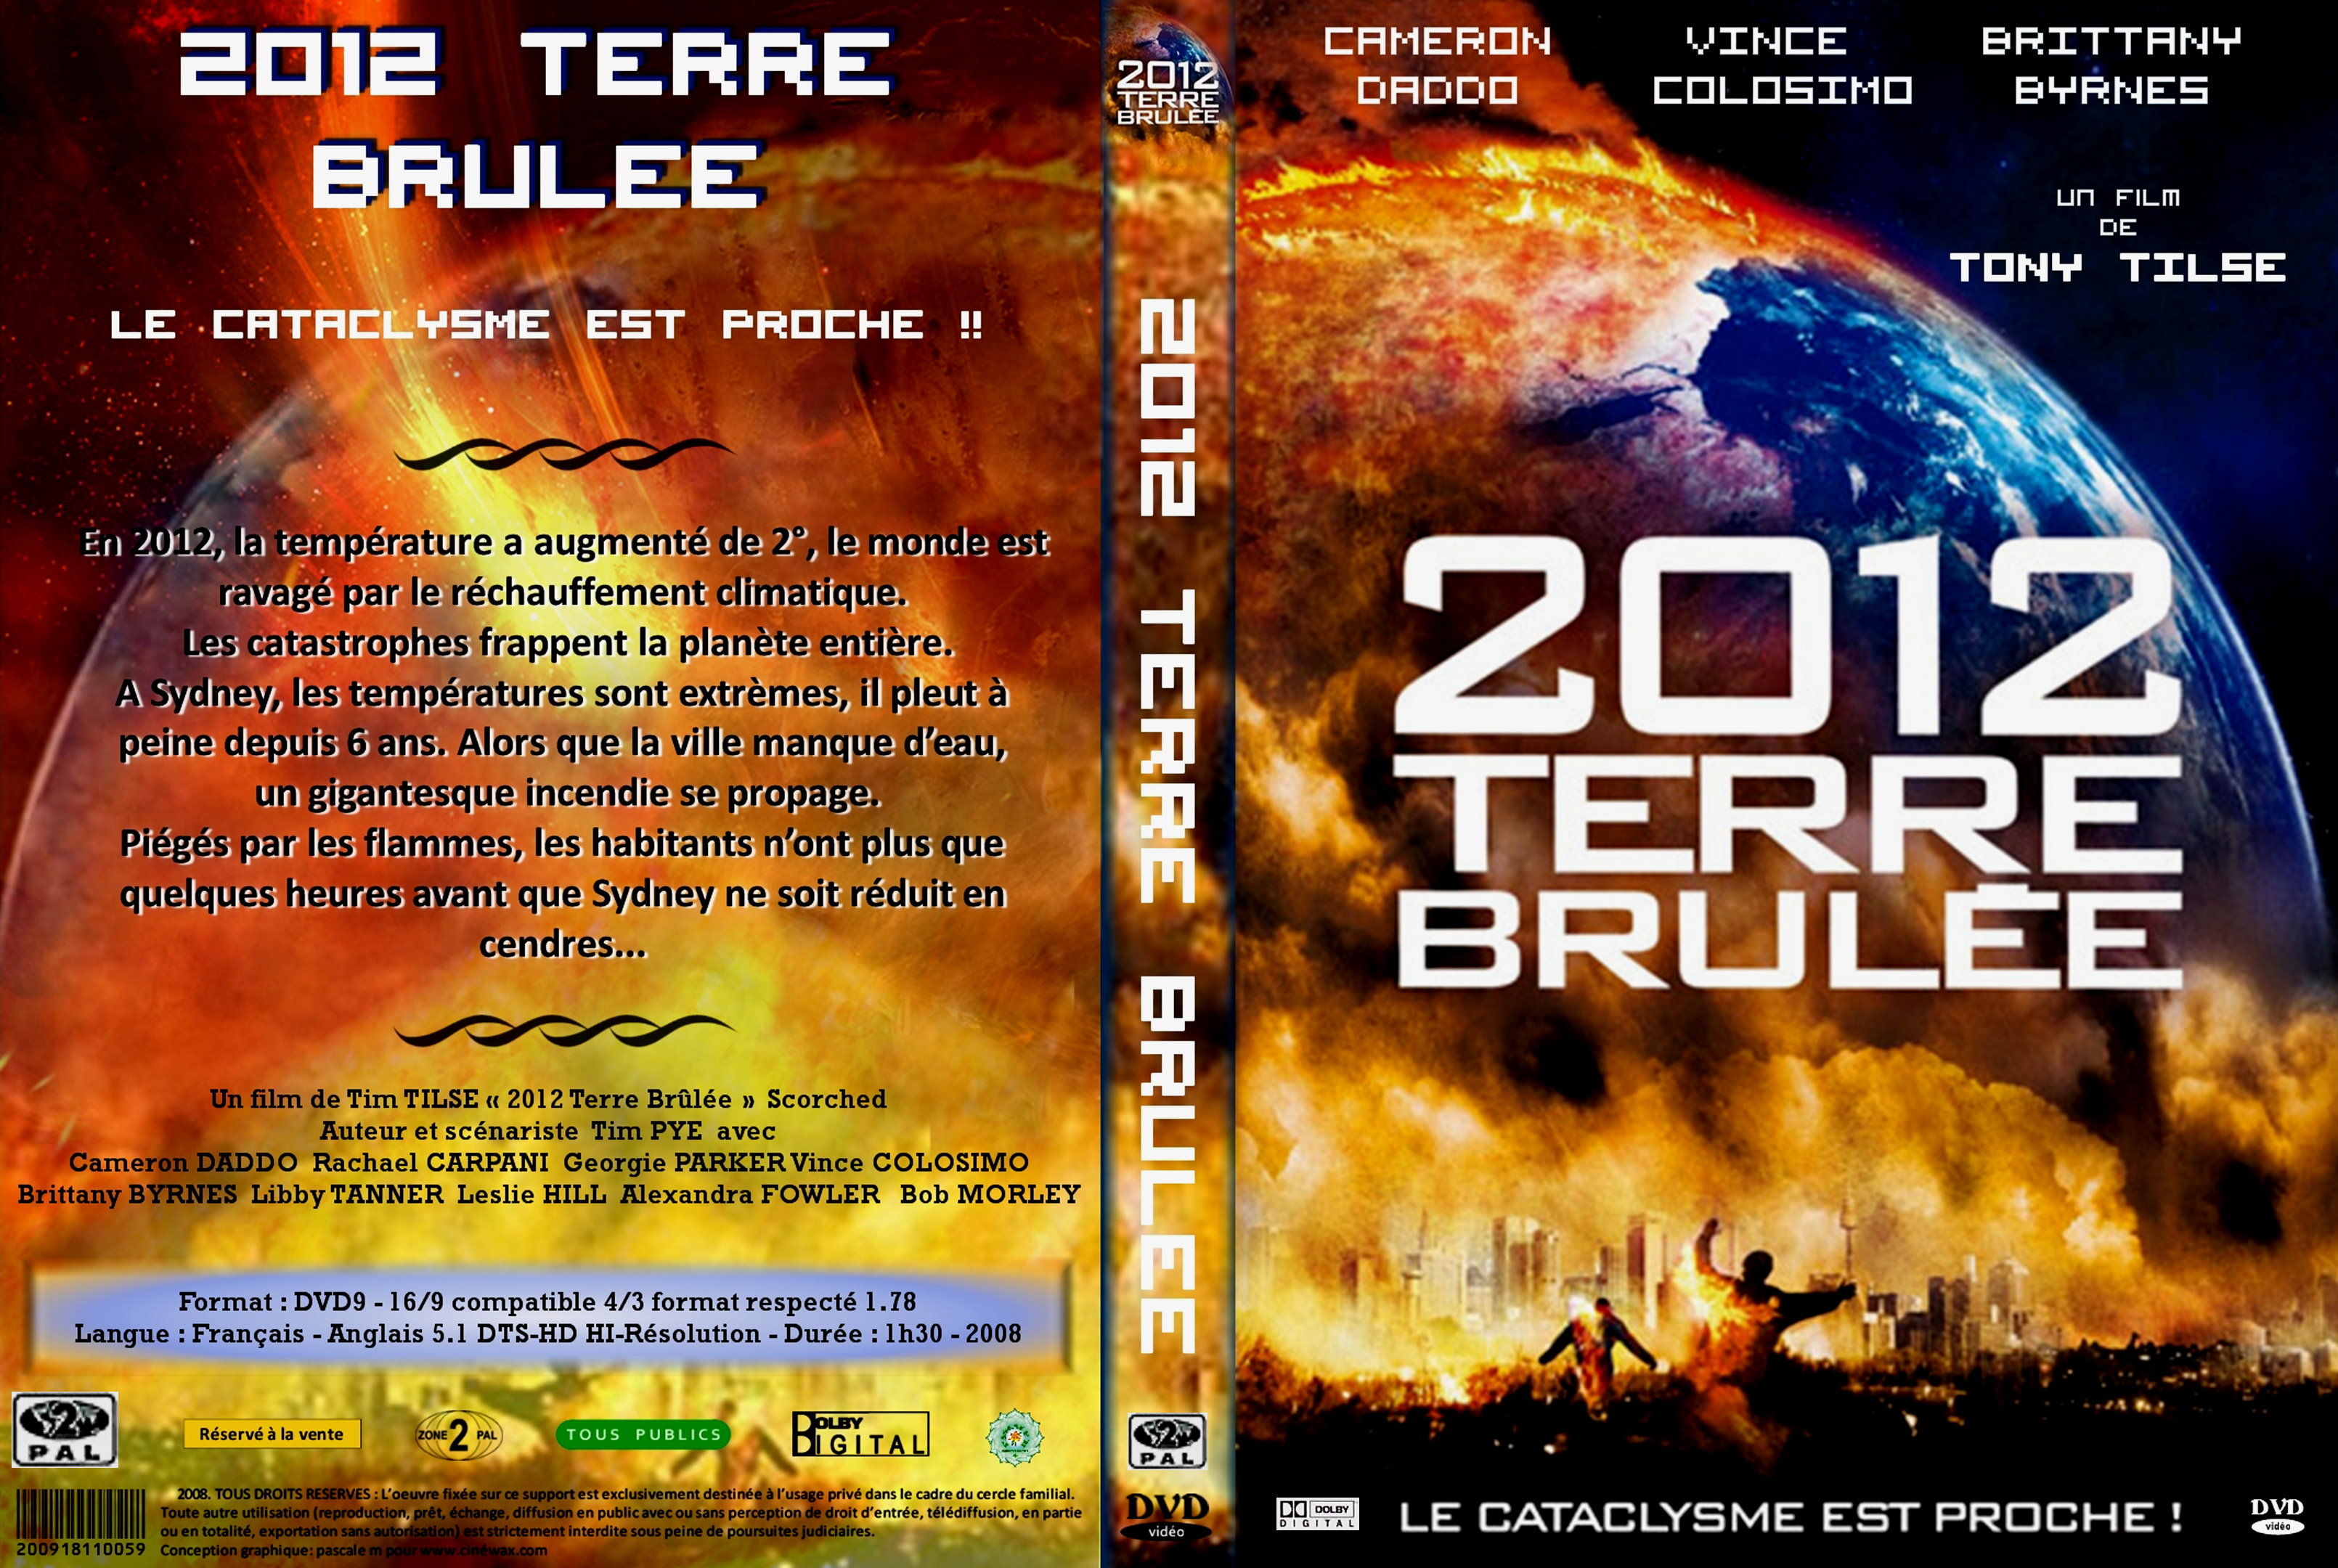 Jaquette DVD 2012 - Terre brule